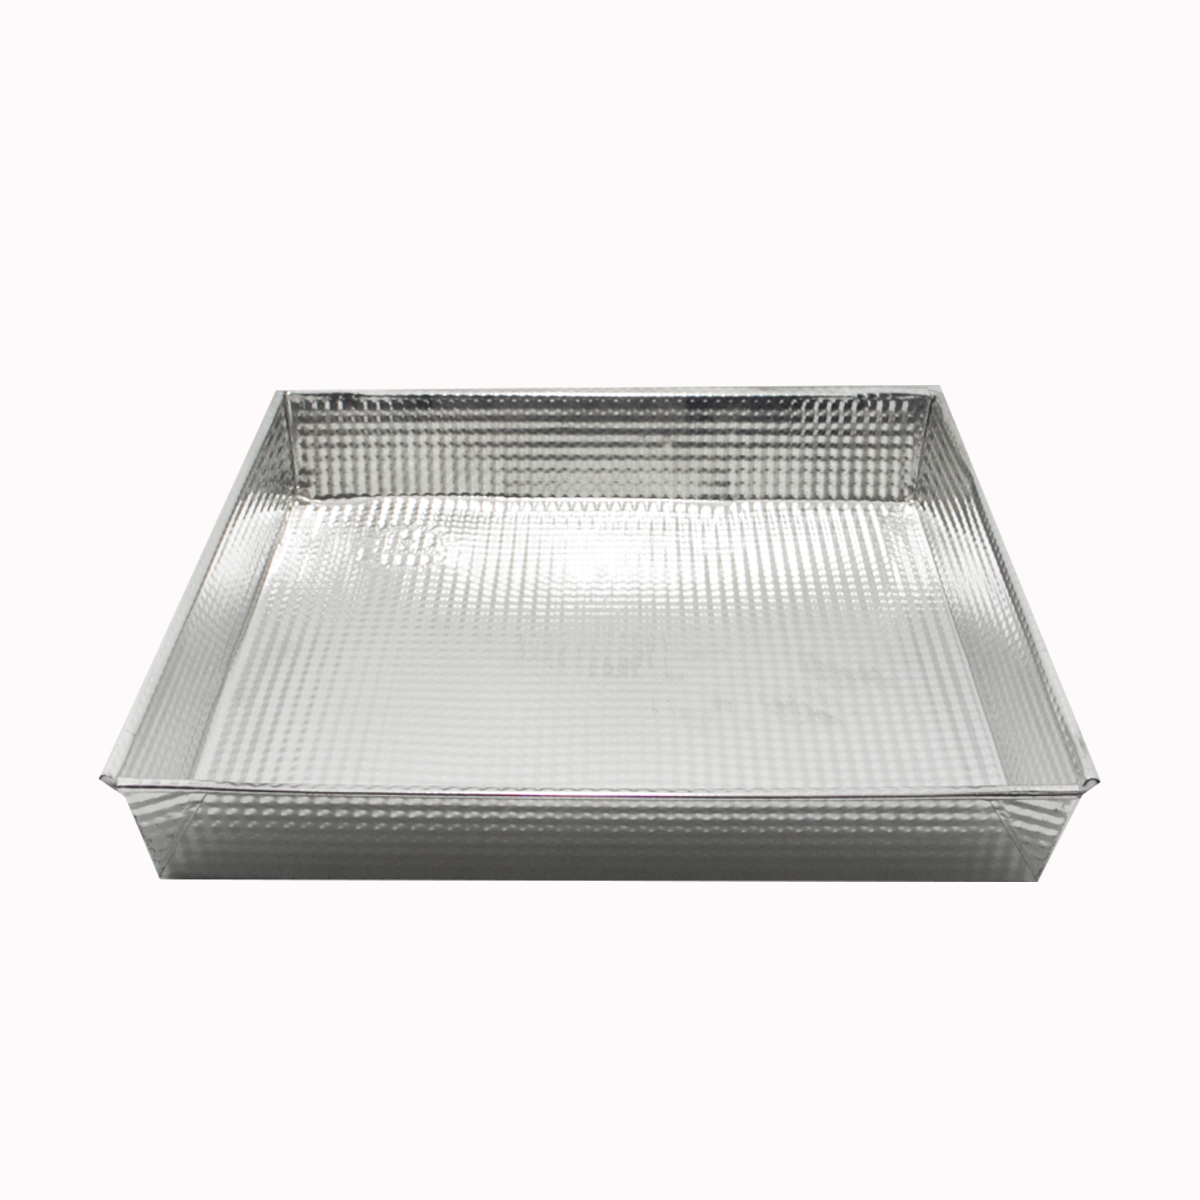 Tortera Graciela - aluminio - 30x29x5cm